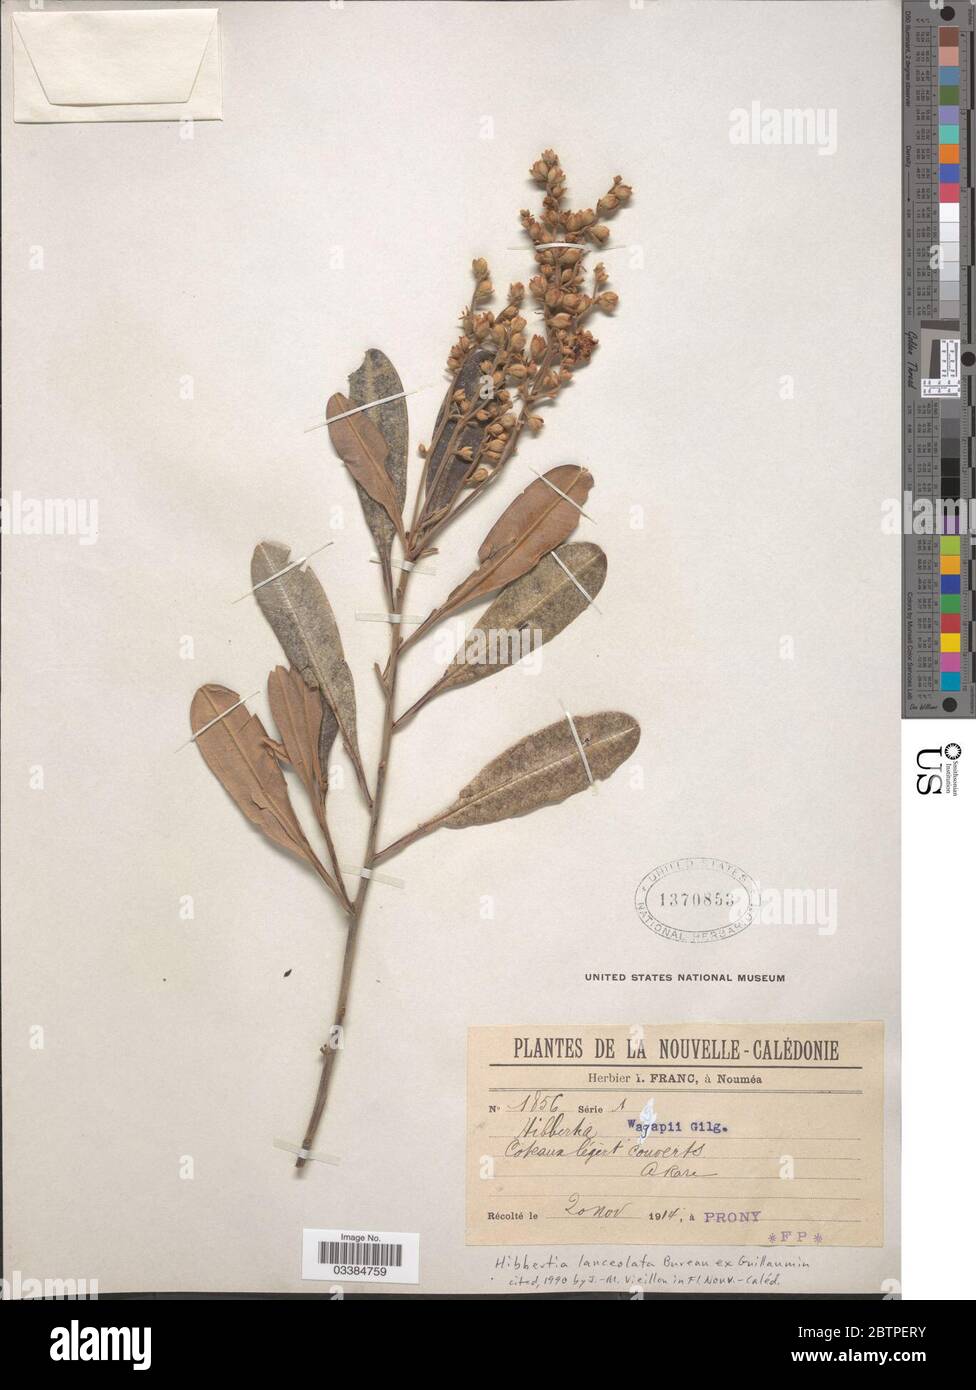 Hibbertia lanceolata Bureau ex Guillaumin. Stock Photo